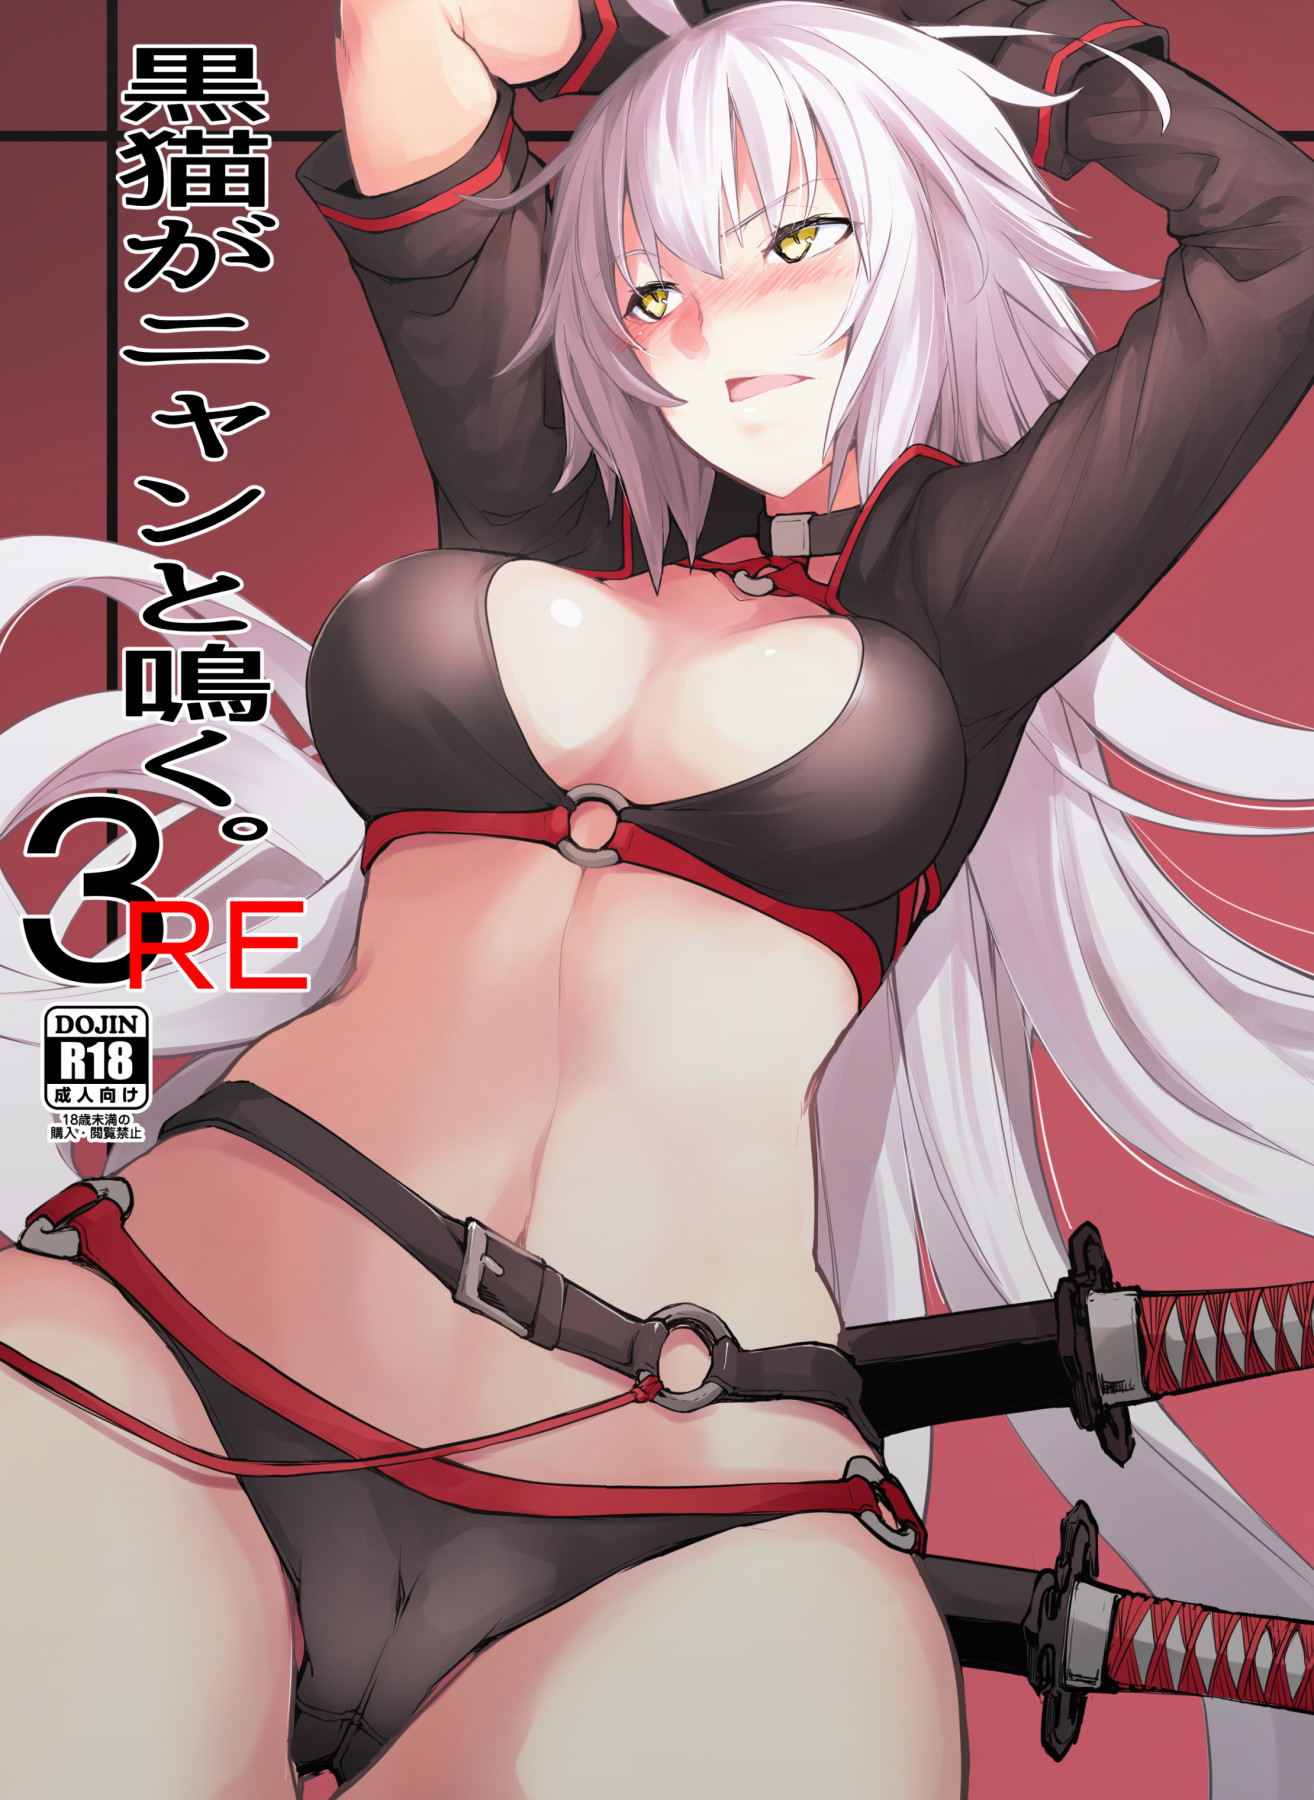 Hentai Manga Comic-The Black Cat Goes Nya 3RE-v22m-Read-1